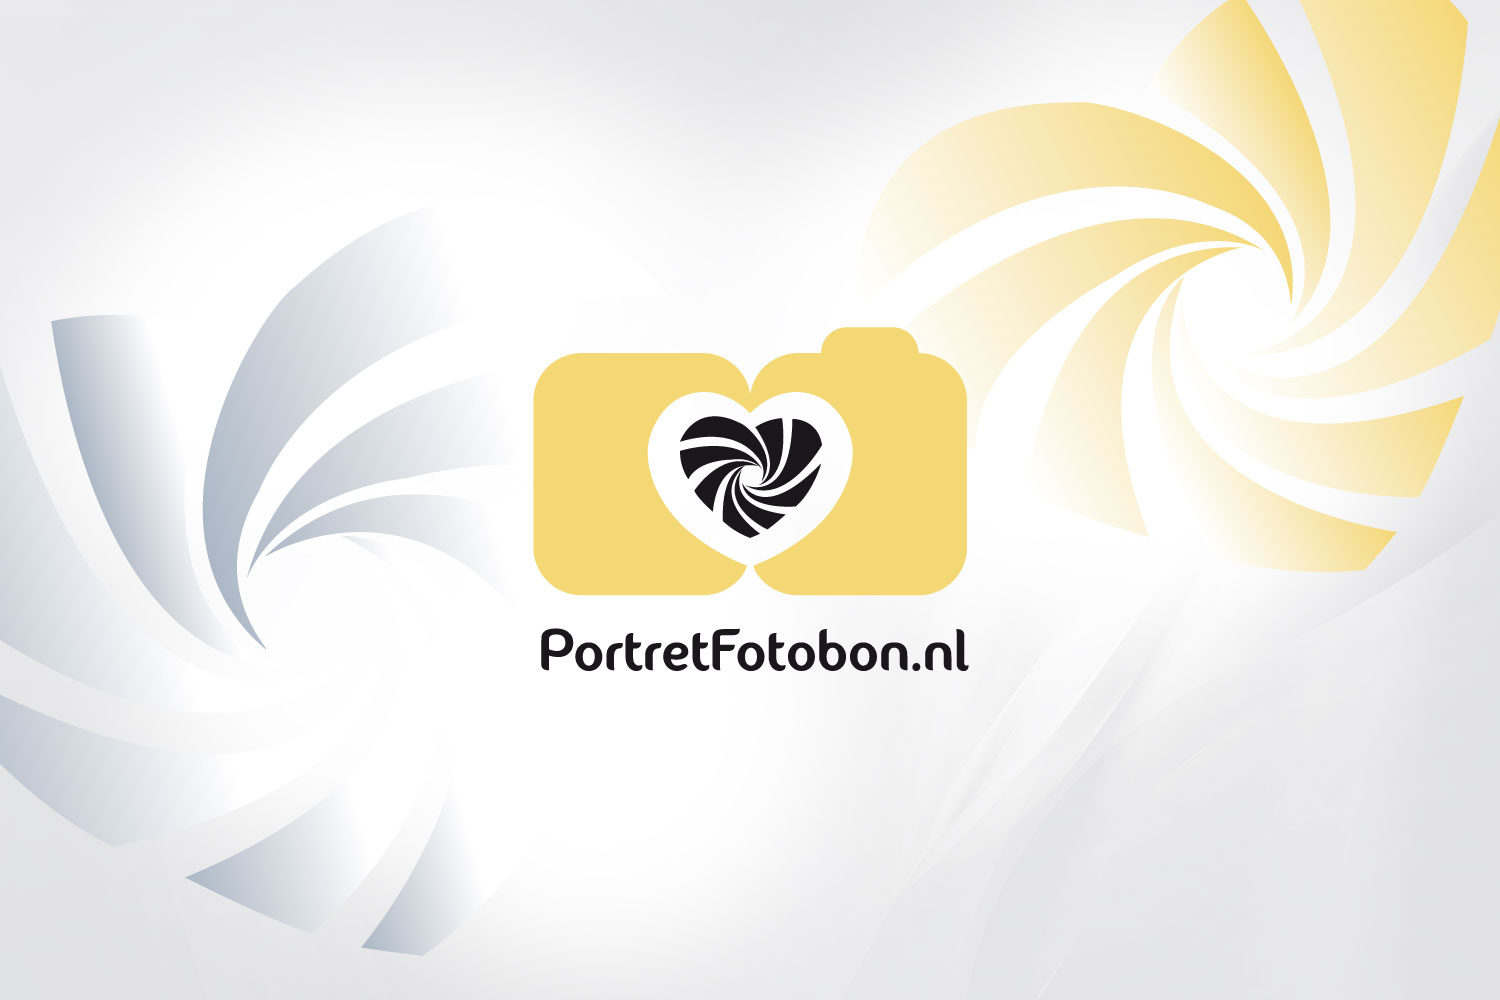 Webdesigner Maastricht, Portretfotobon huisstijl, logo ontwerp, website ontwikkeling